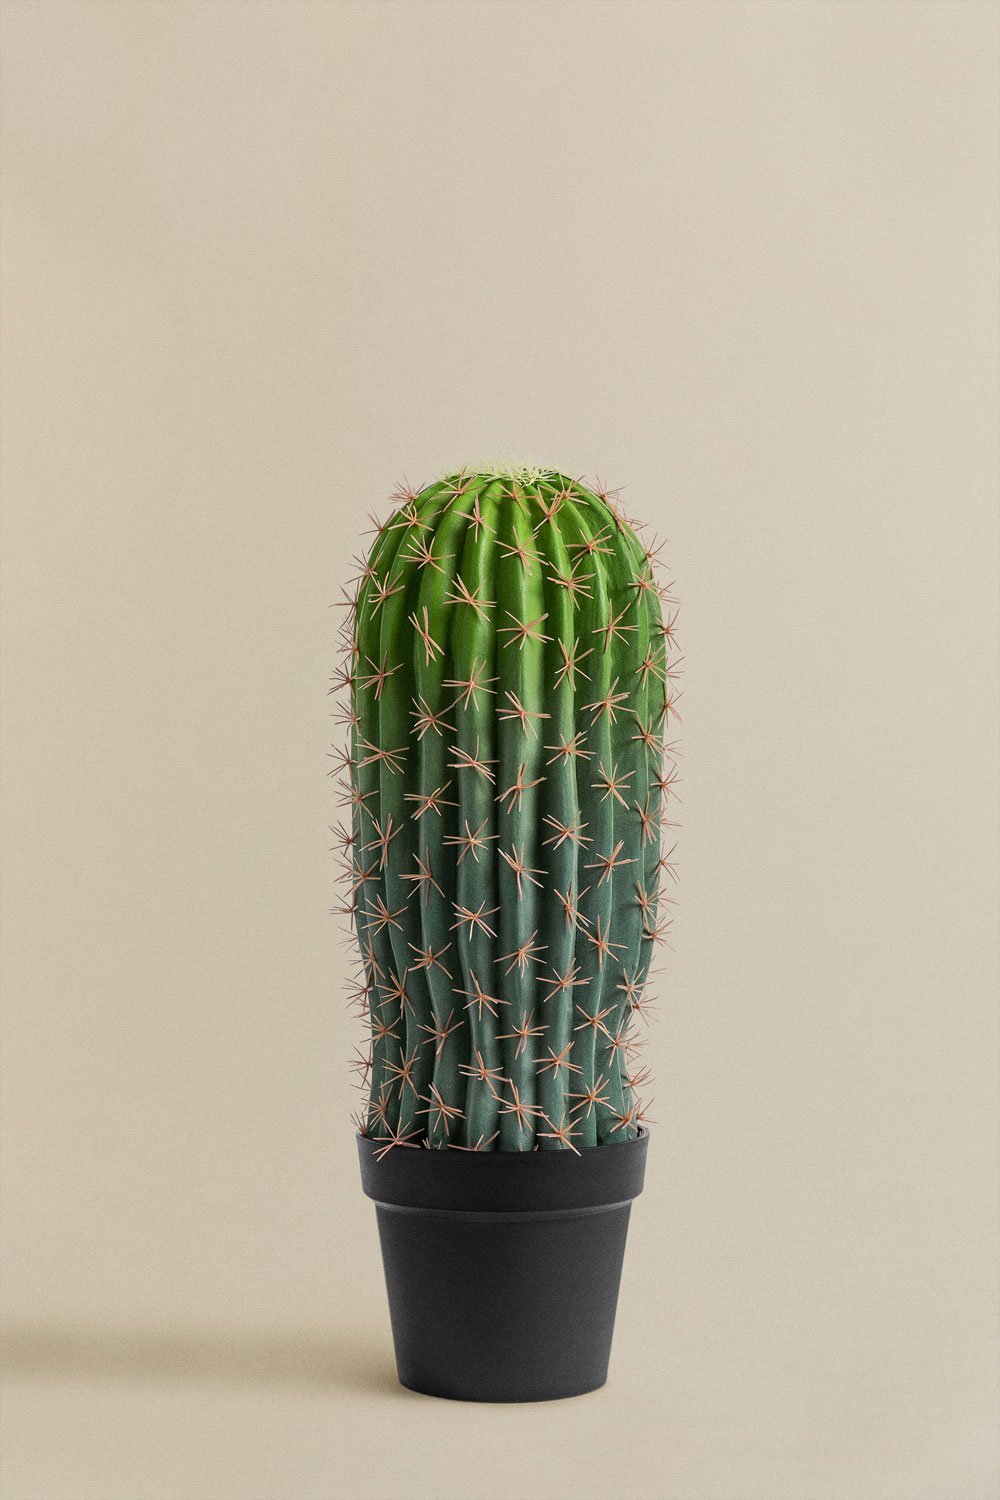 Cactus artificiale Echinopsis 60 cm, immagine della galleria 1